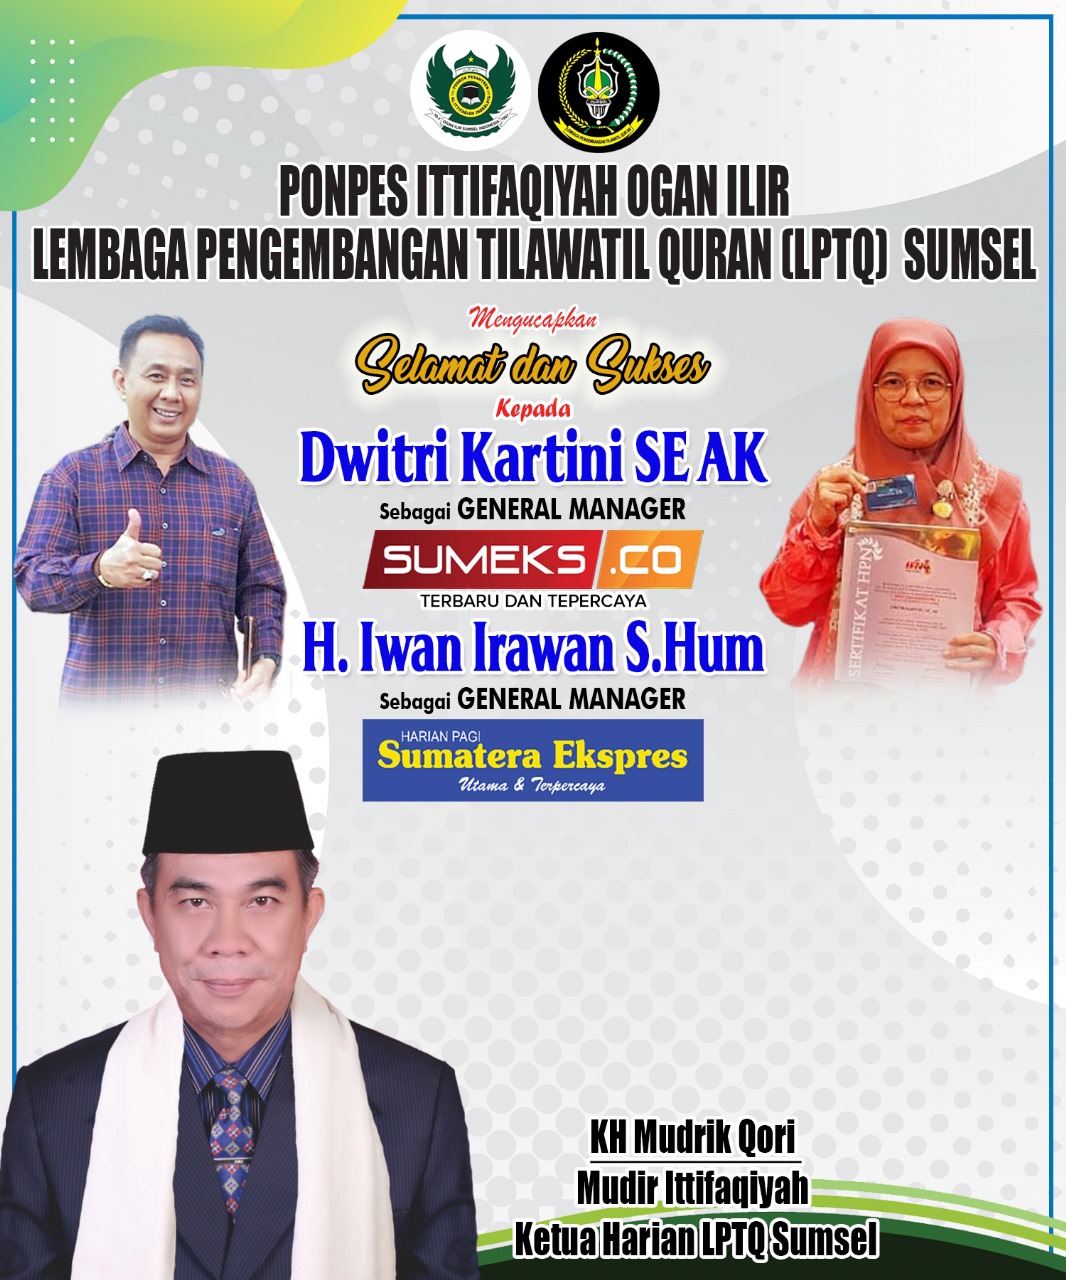 Ponpes Ittifaqiyah Ogan Ilir LPTQ Sumsel Mengucapkan Selamat dan Sukses Kepada Iwan Irawan dan Dwitri Kartini